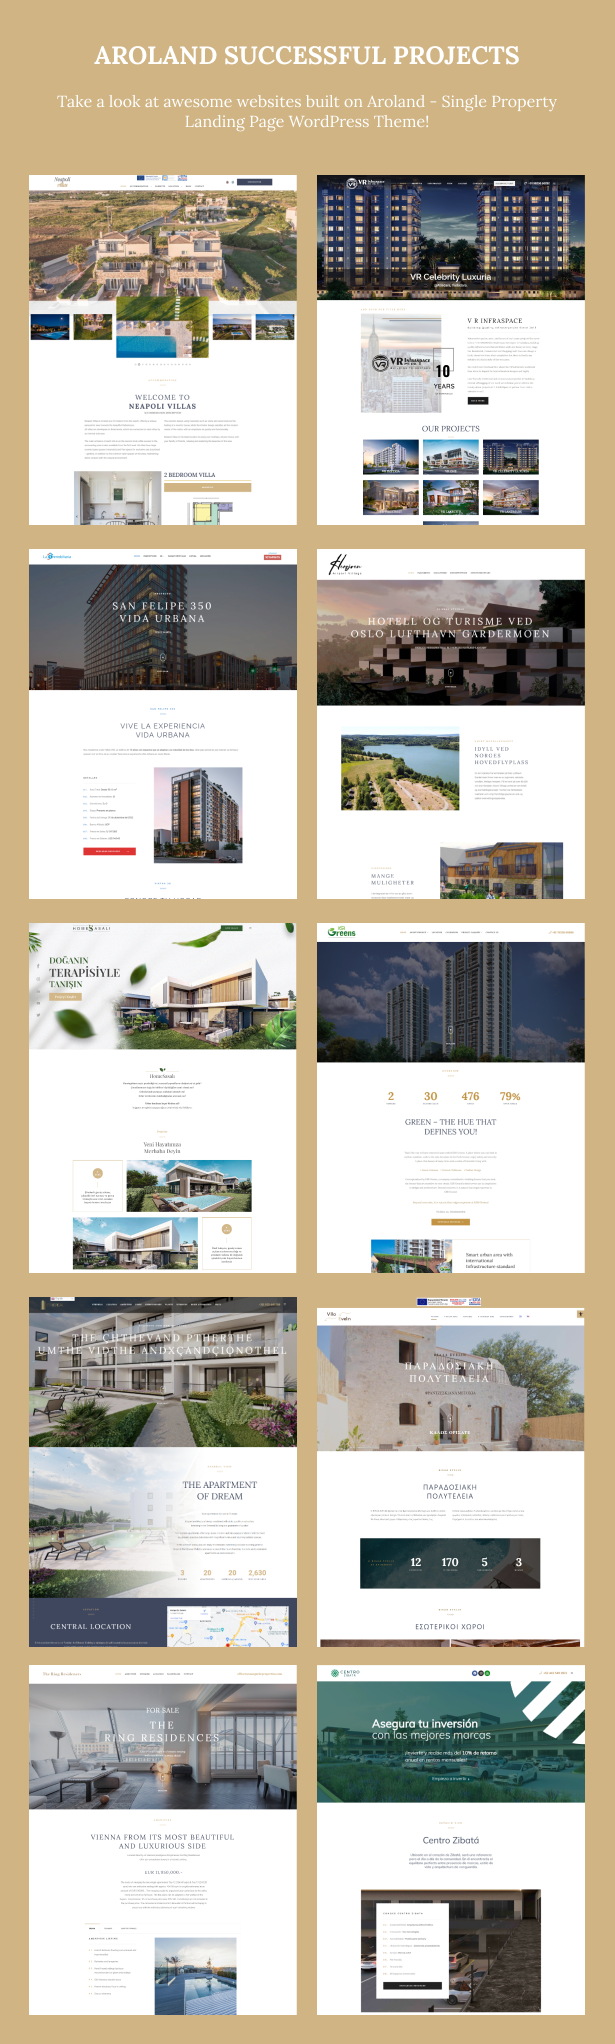 Aroland - Single Property Landing Page WordPress Theme Projects Showcase